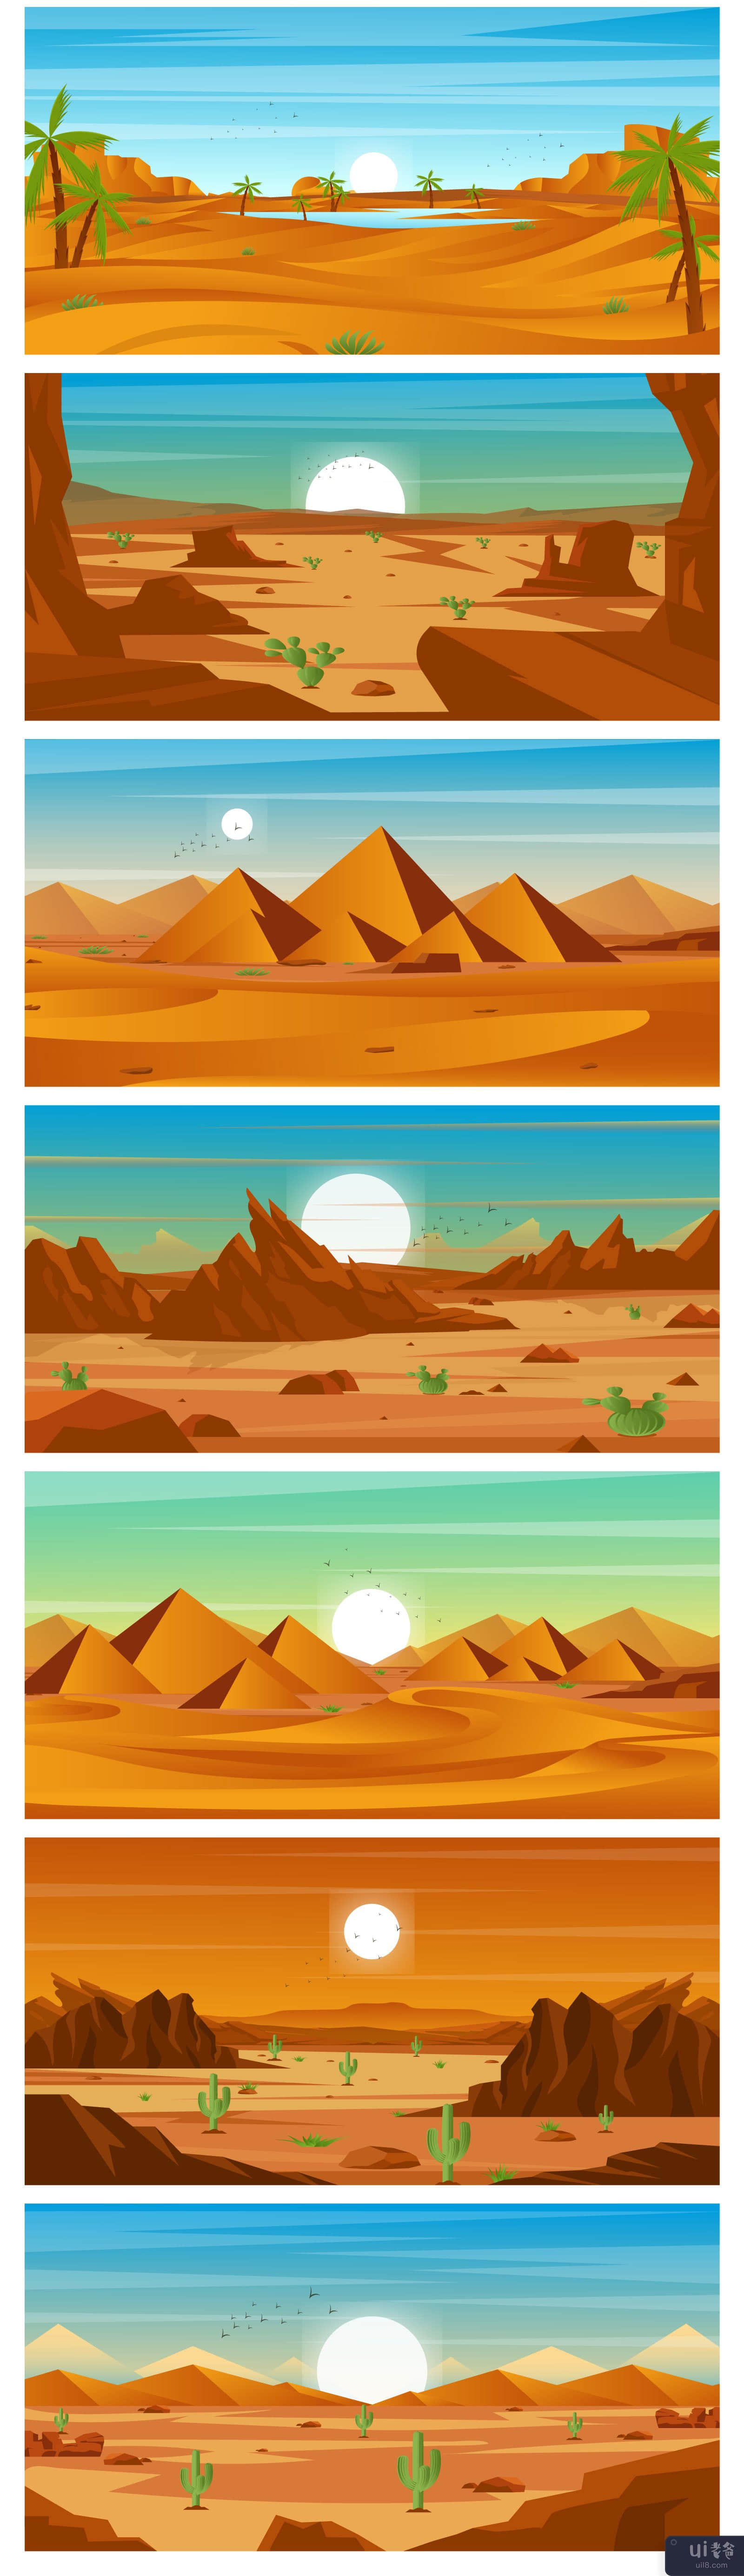 15 个沙漠背景插图(15 Desert Backgrounds Illustrations)插图